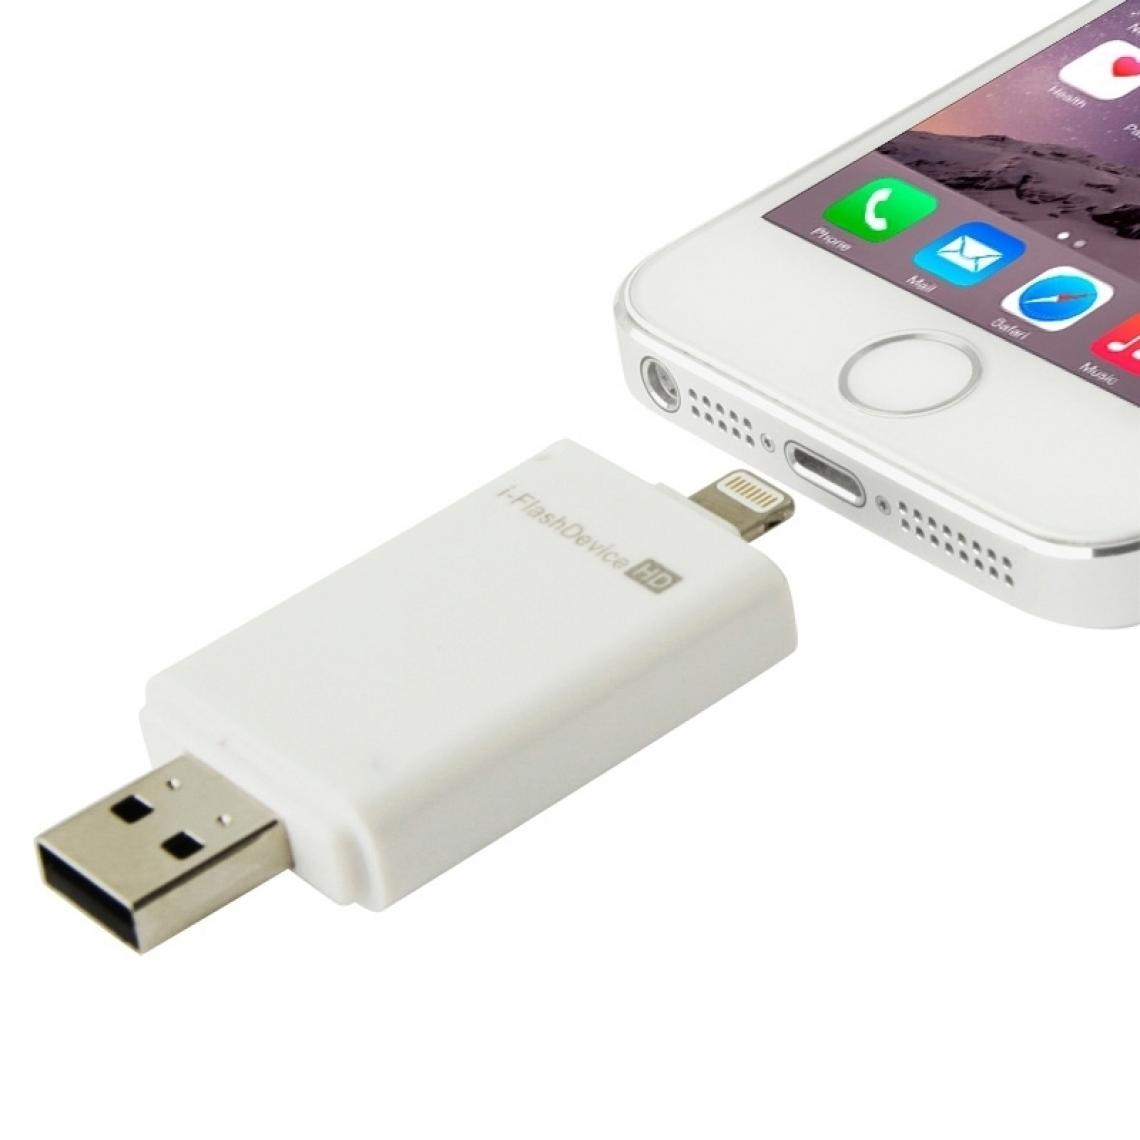 Wewoo - Clé USB blanc pour iPhone / iPad / iPod touch 16 Go i-Flash Driver HD U disque USB Memory Stick - Clavier